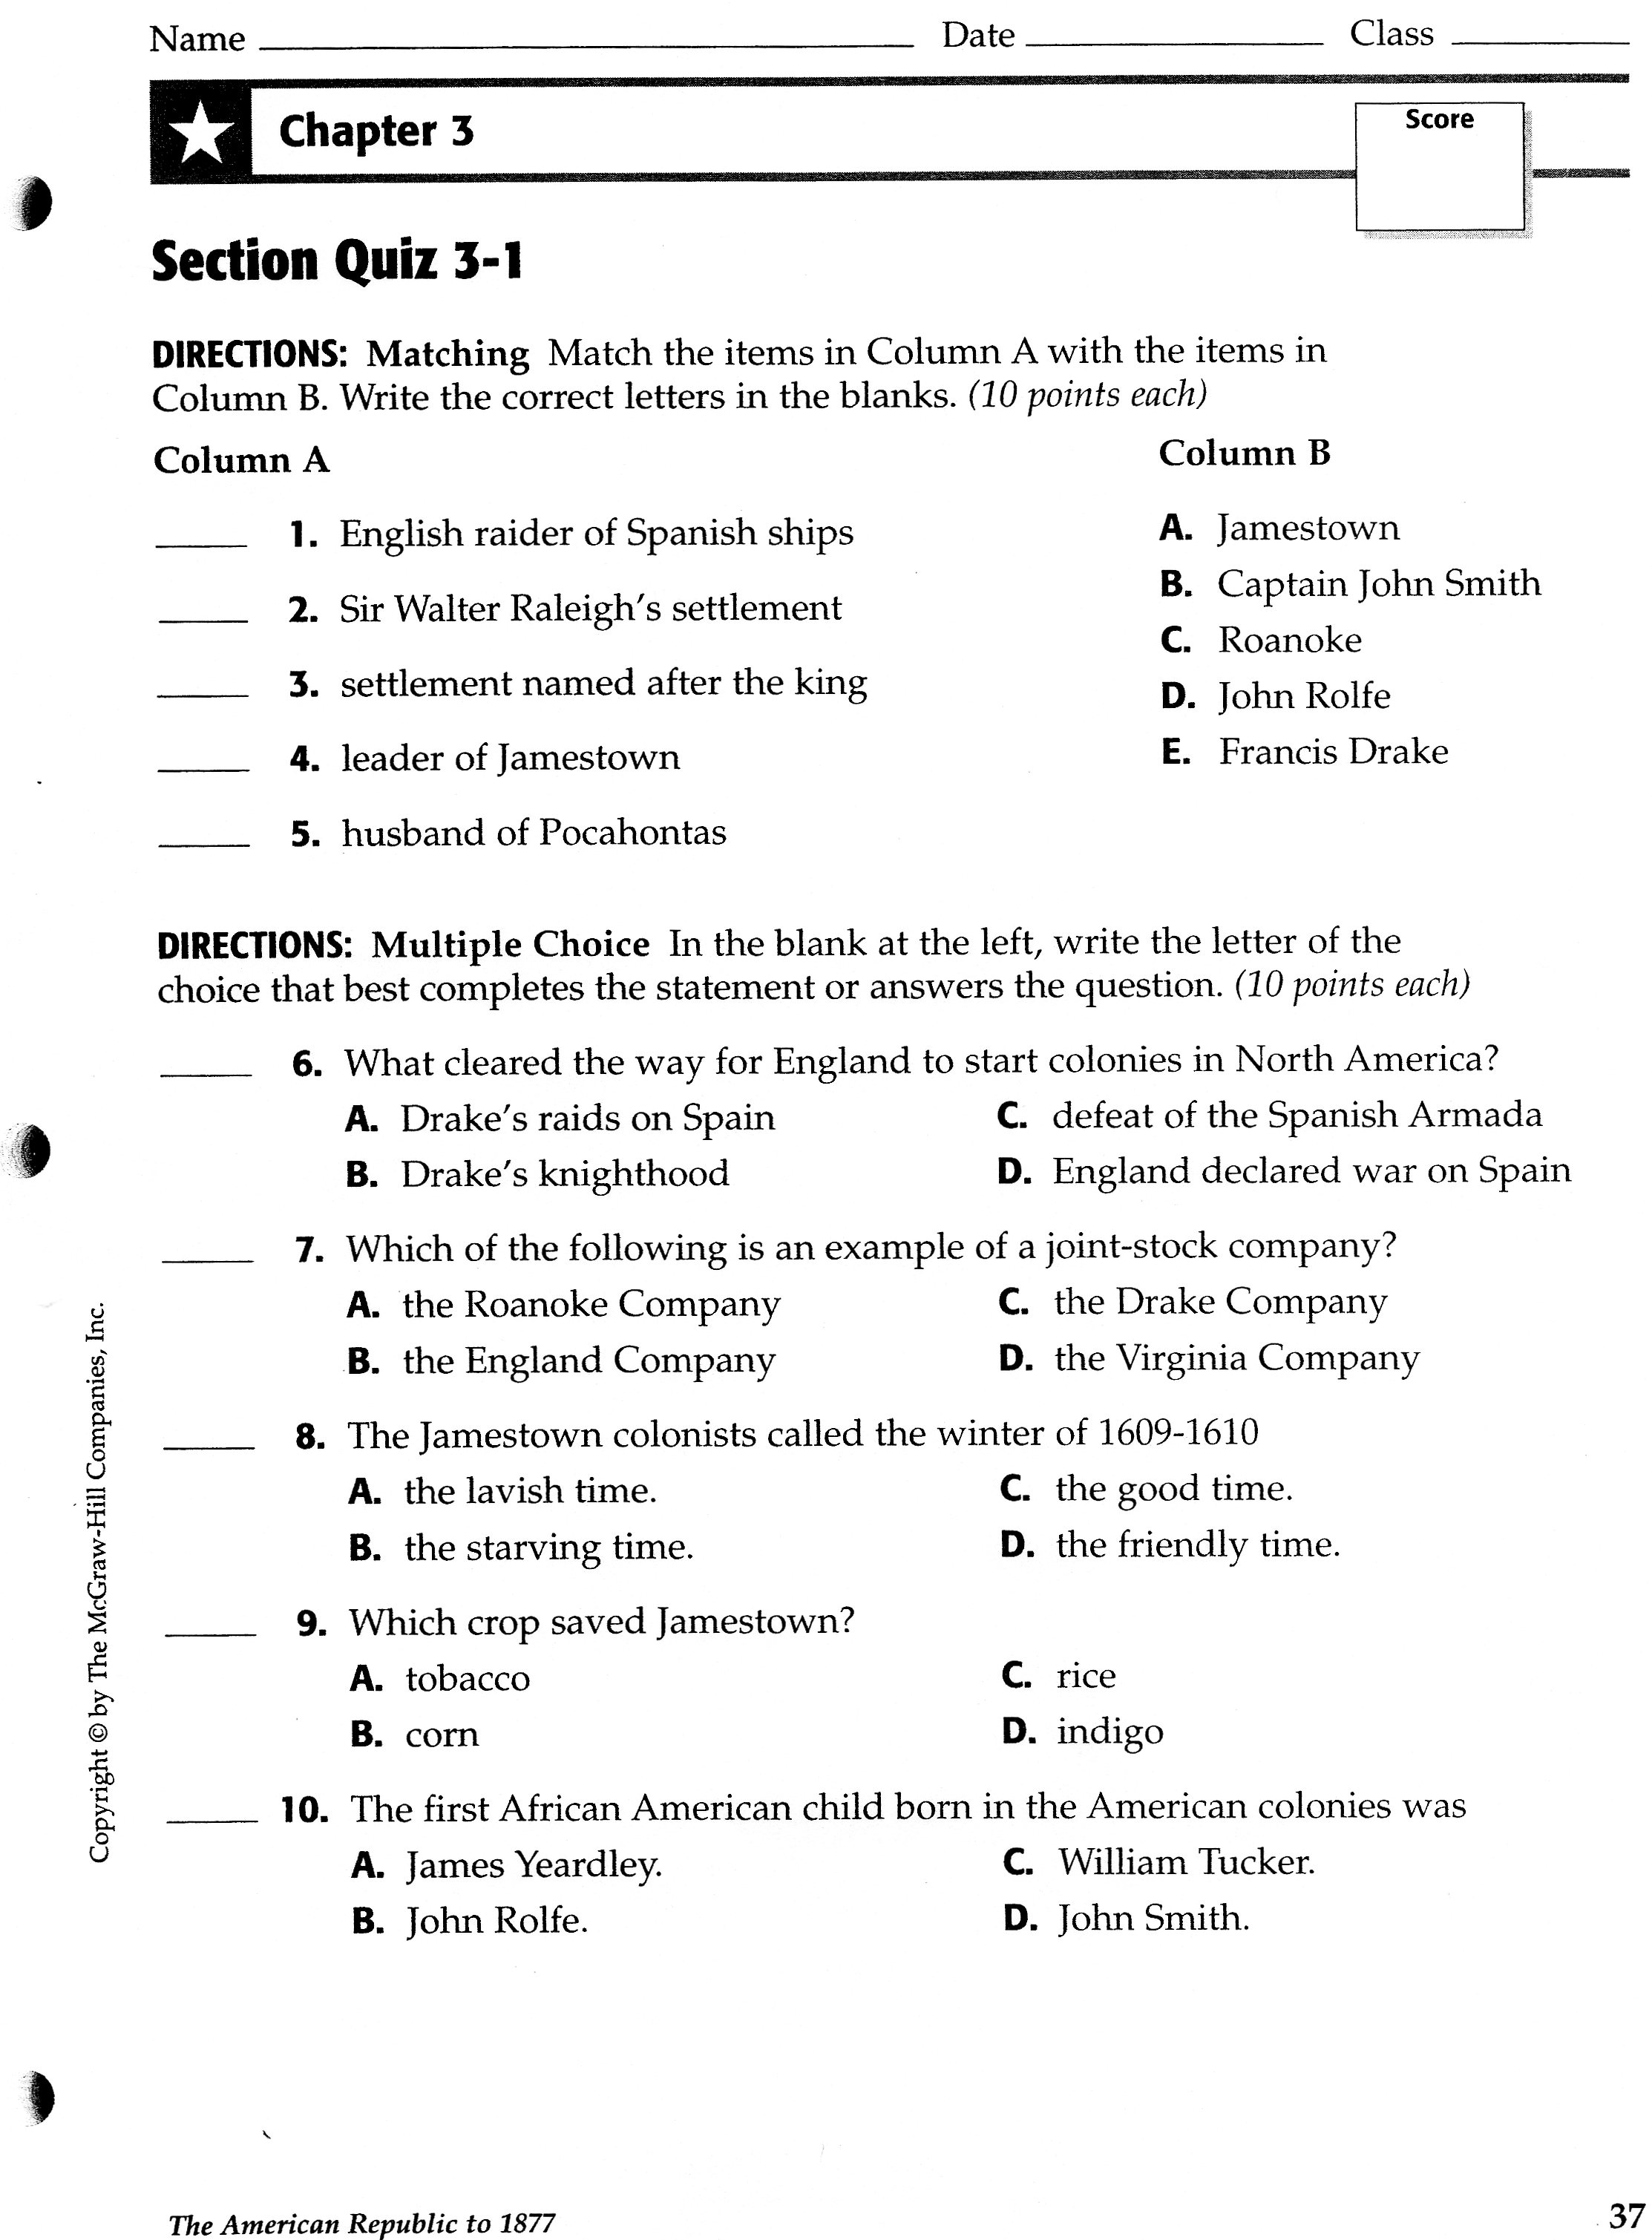 Social Studies For 7th Graders Worksheet